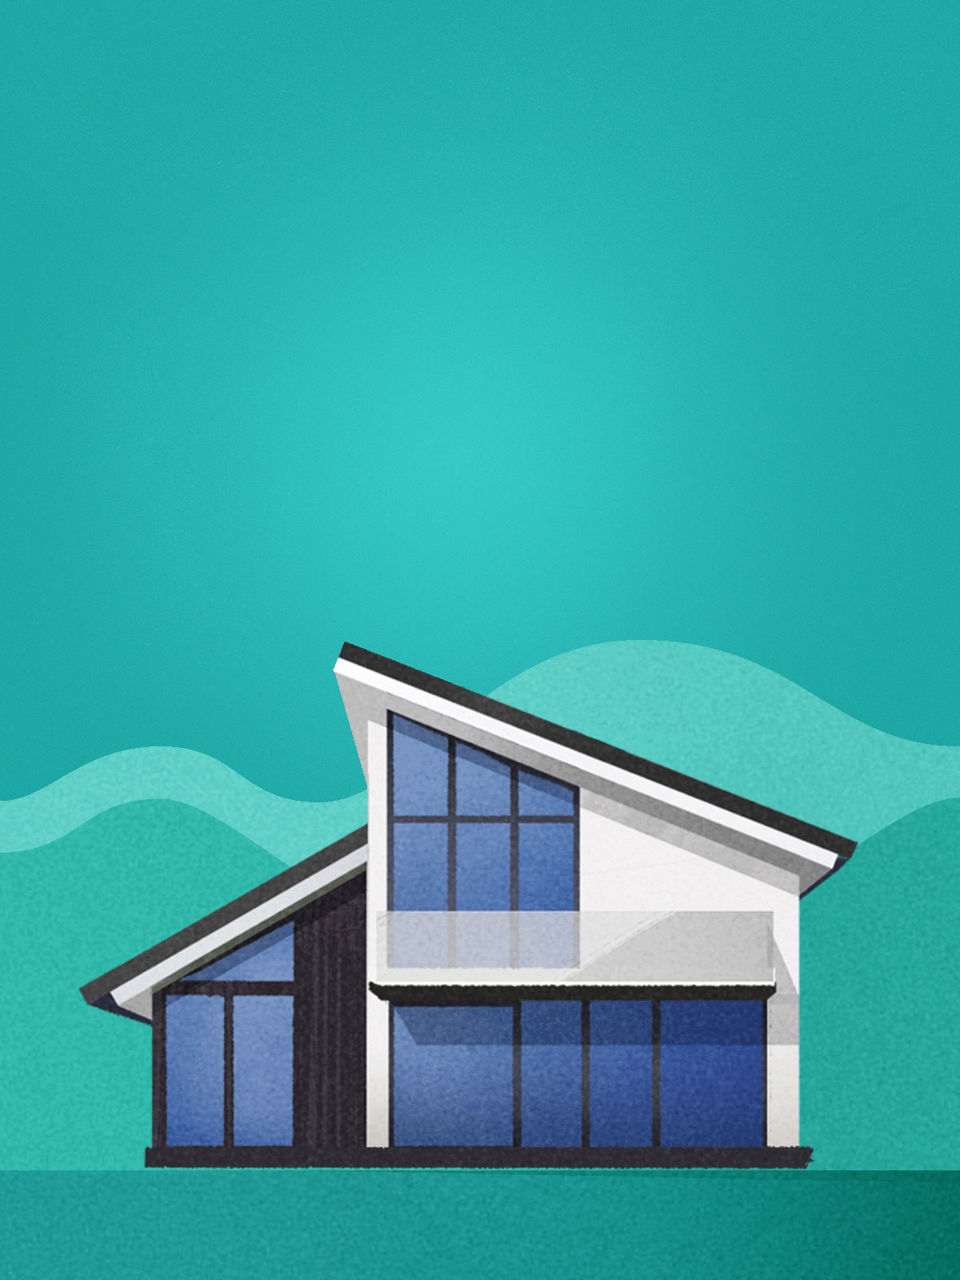 Illustration eines Hauses